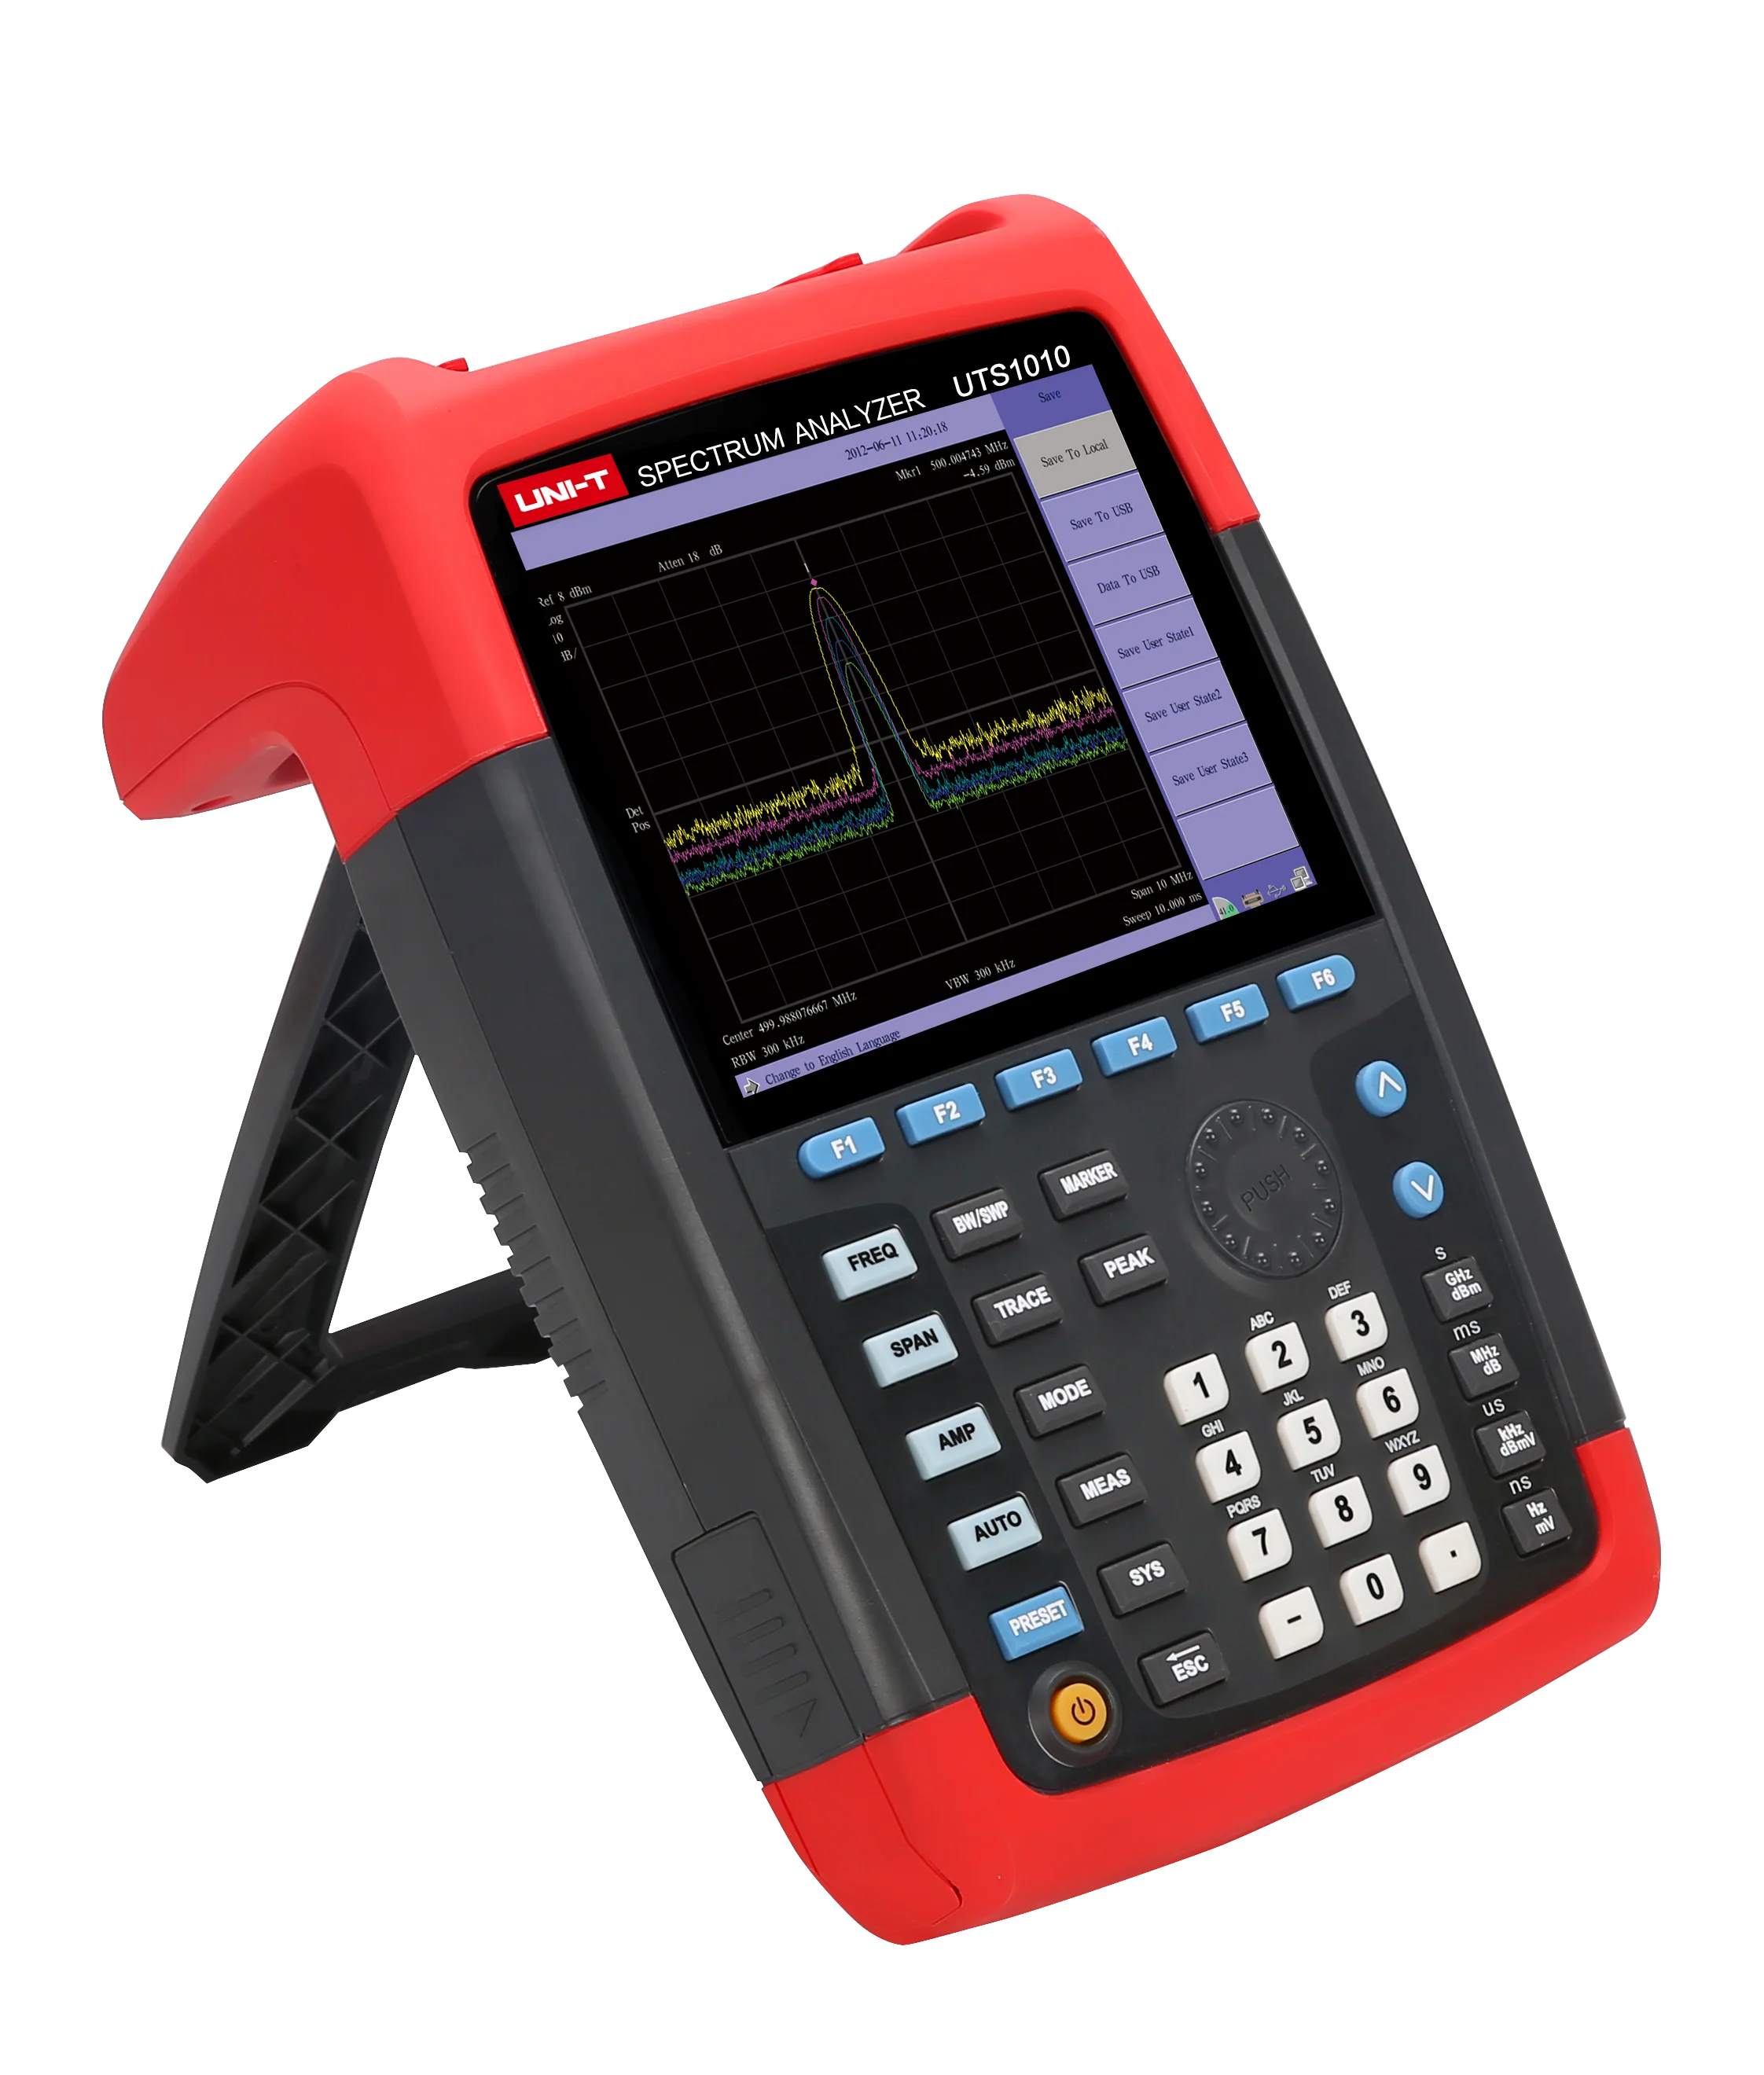 

Sale promotion UNI-T UTS1010 Handheld Spectrum Analyzer; 9kHz to 2GHz Spectrum Analyzer, 1Hz Resolution, USB Communication